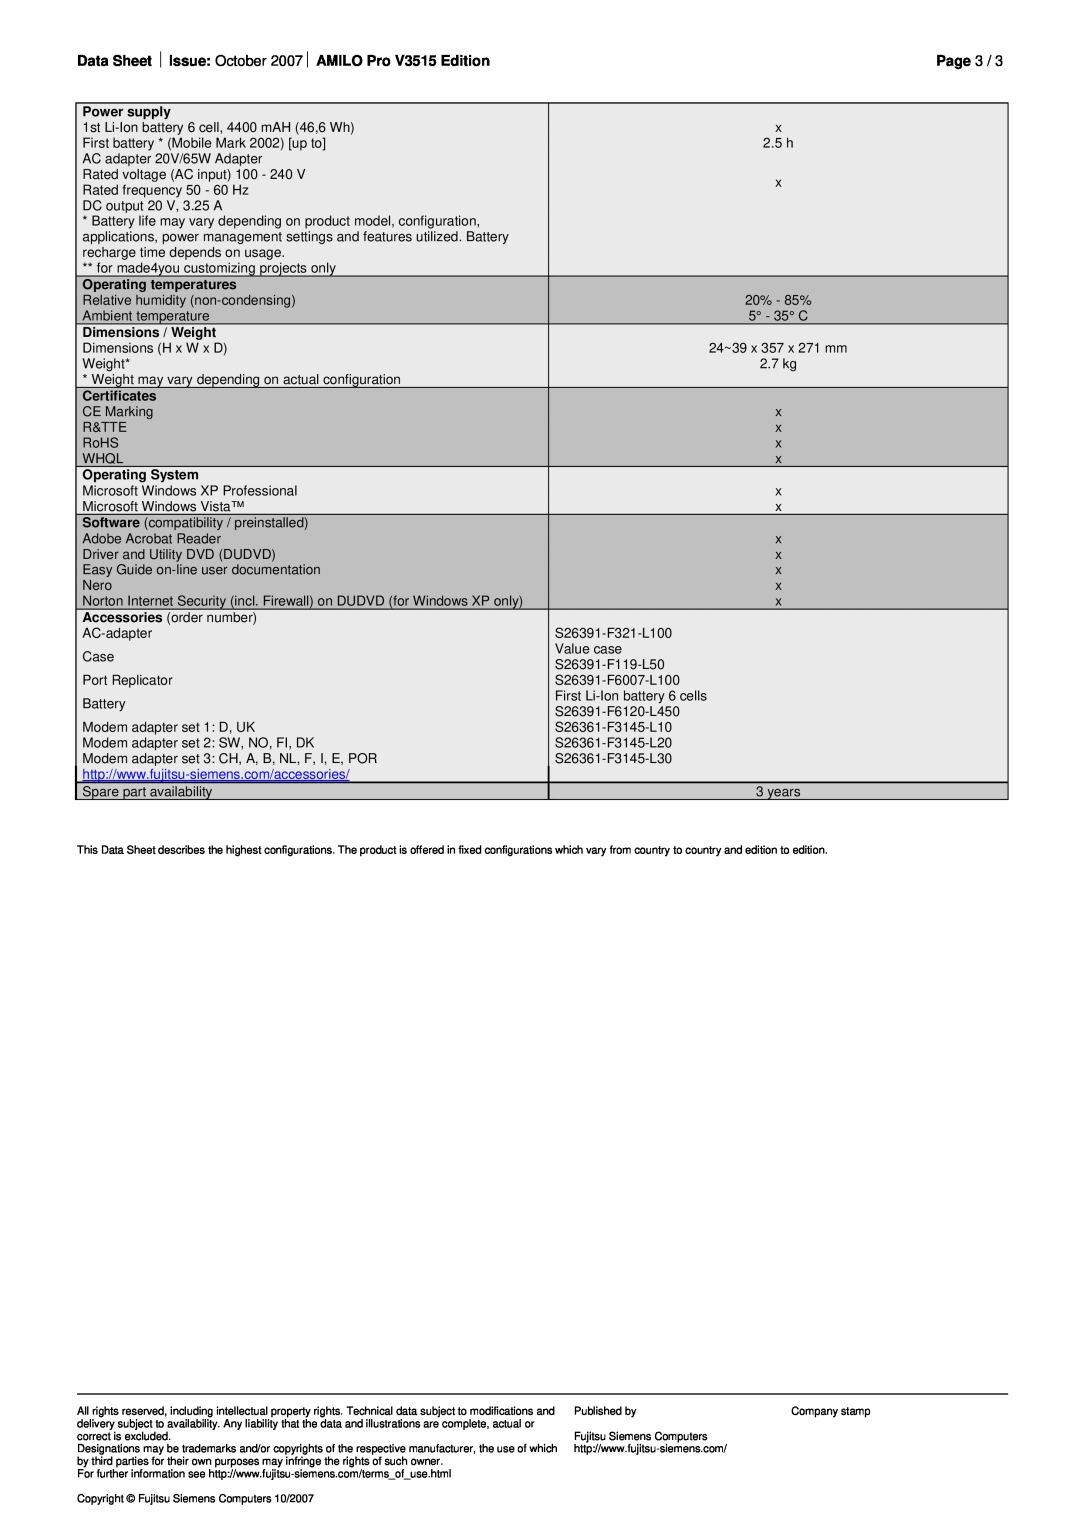 Fujitsu Siemens Computers manual Data Sheet Issue October 2007 AMILO Pro V3515 Edition, Page, Power supply, Certificates 